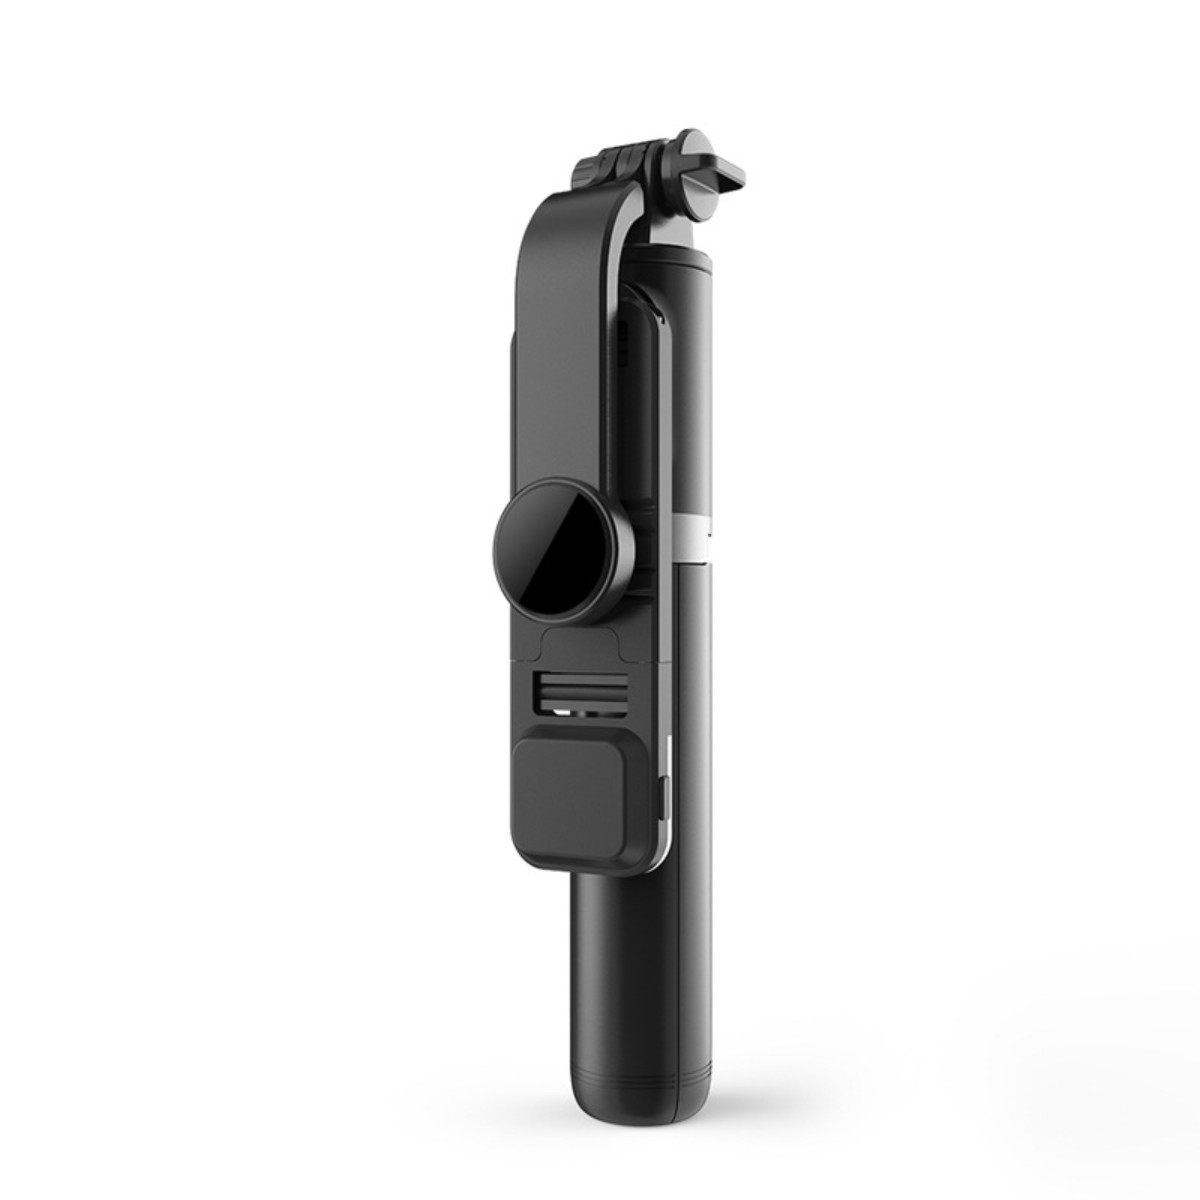 SYNTEK Selfie stick Selfie-Stick, mini Schwarz desktop light live extension with handheld fill holder tripod all-in-one